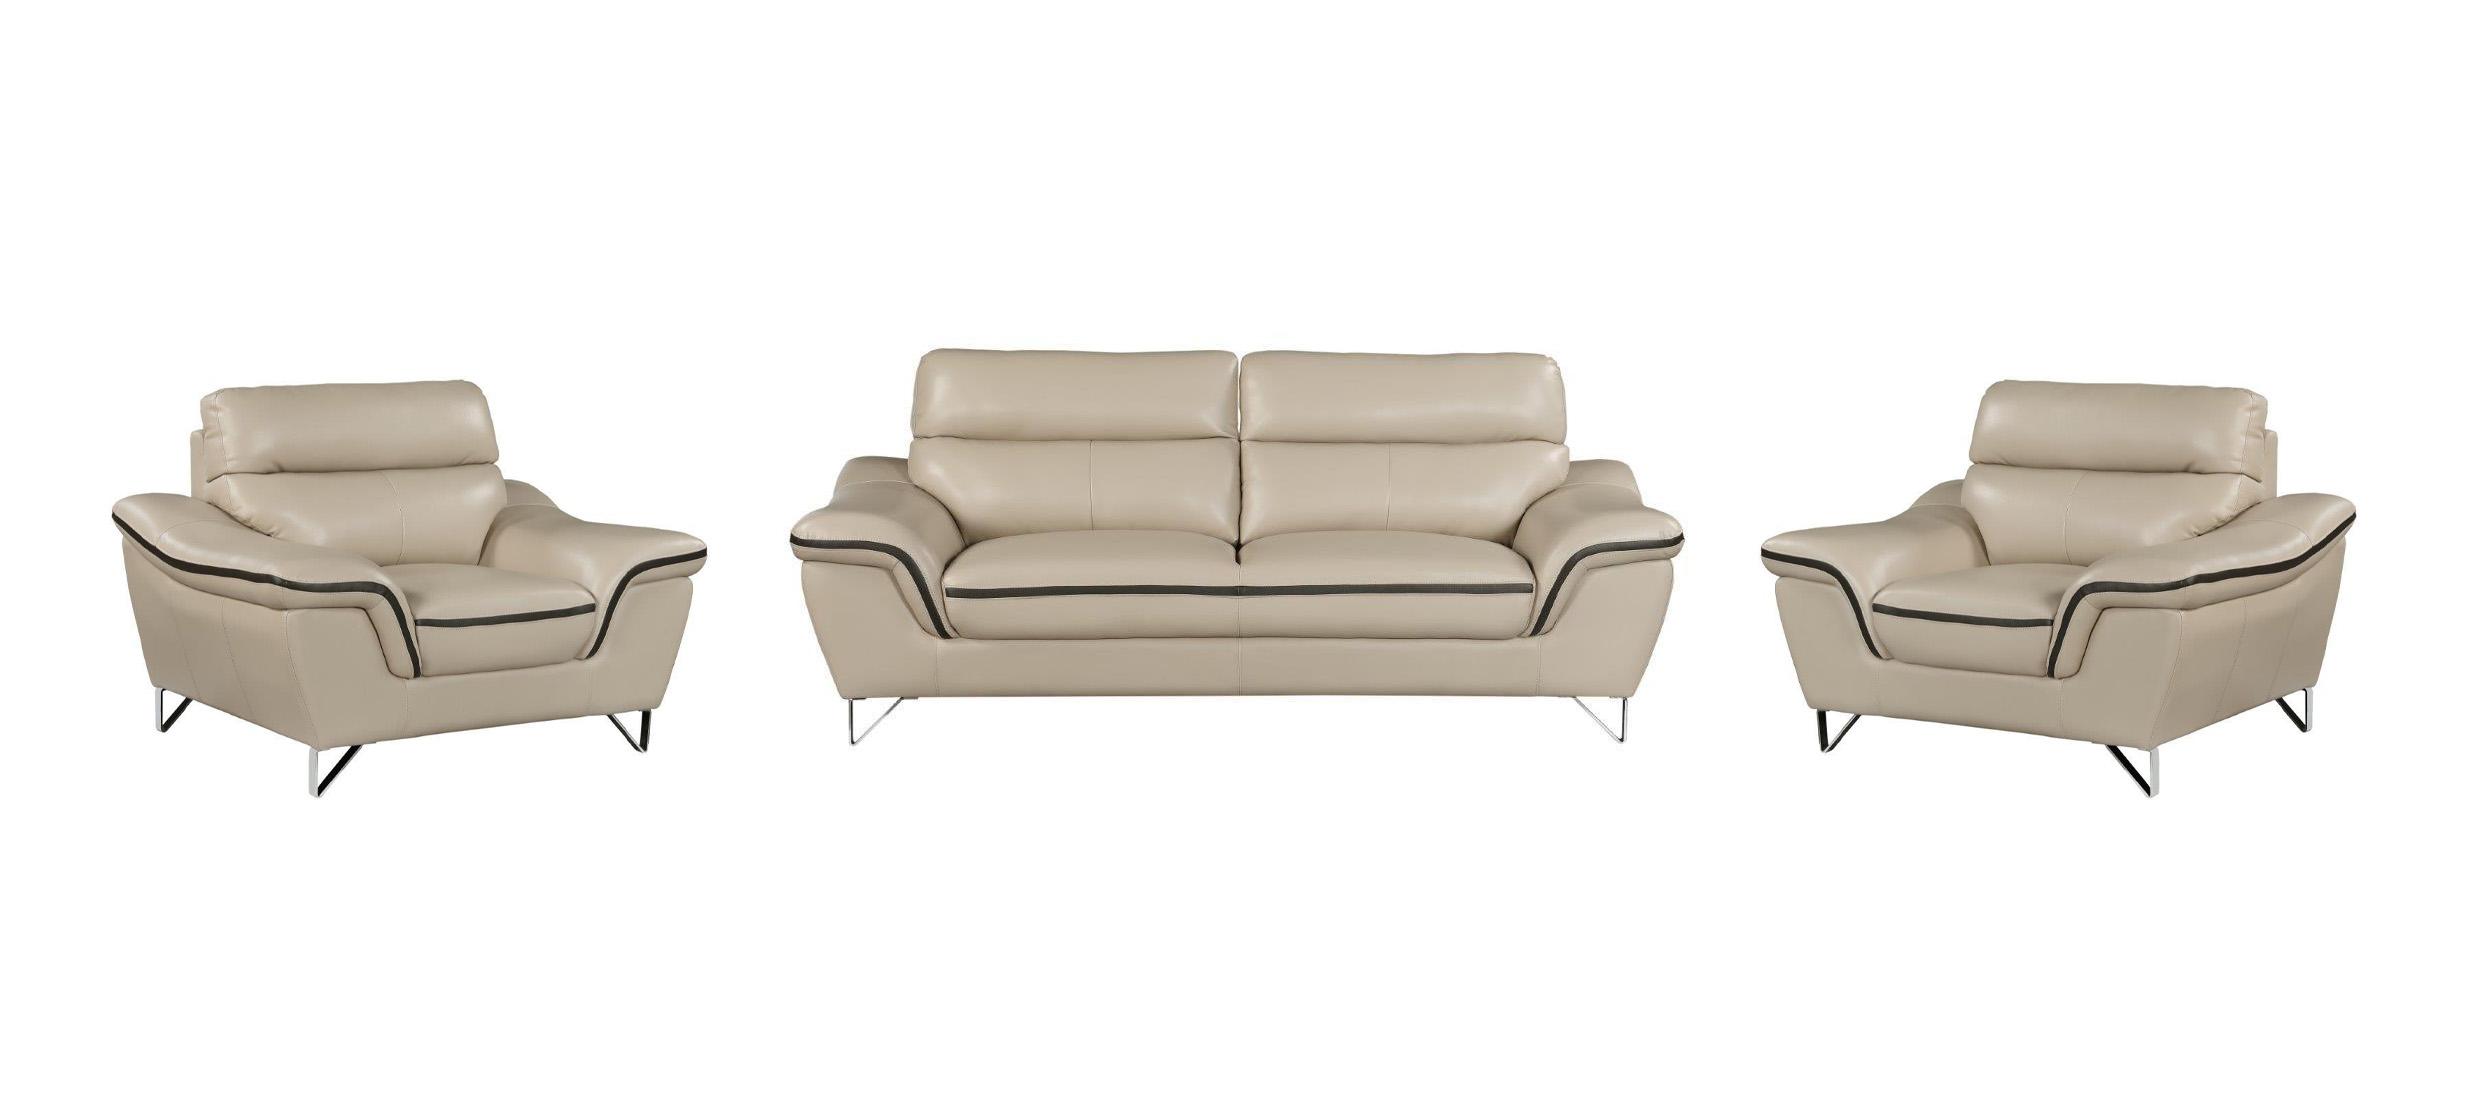 Contemporary Sofa Set 168 168-BEIGE-S-C-C-3-PC in Beige leather gel